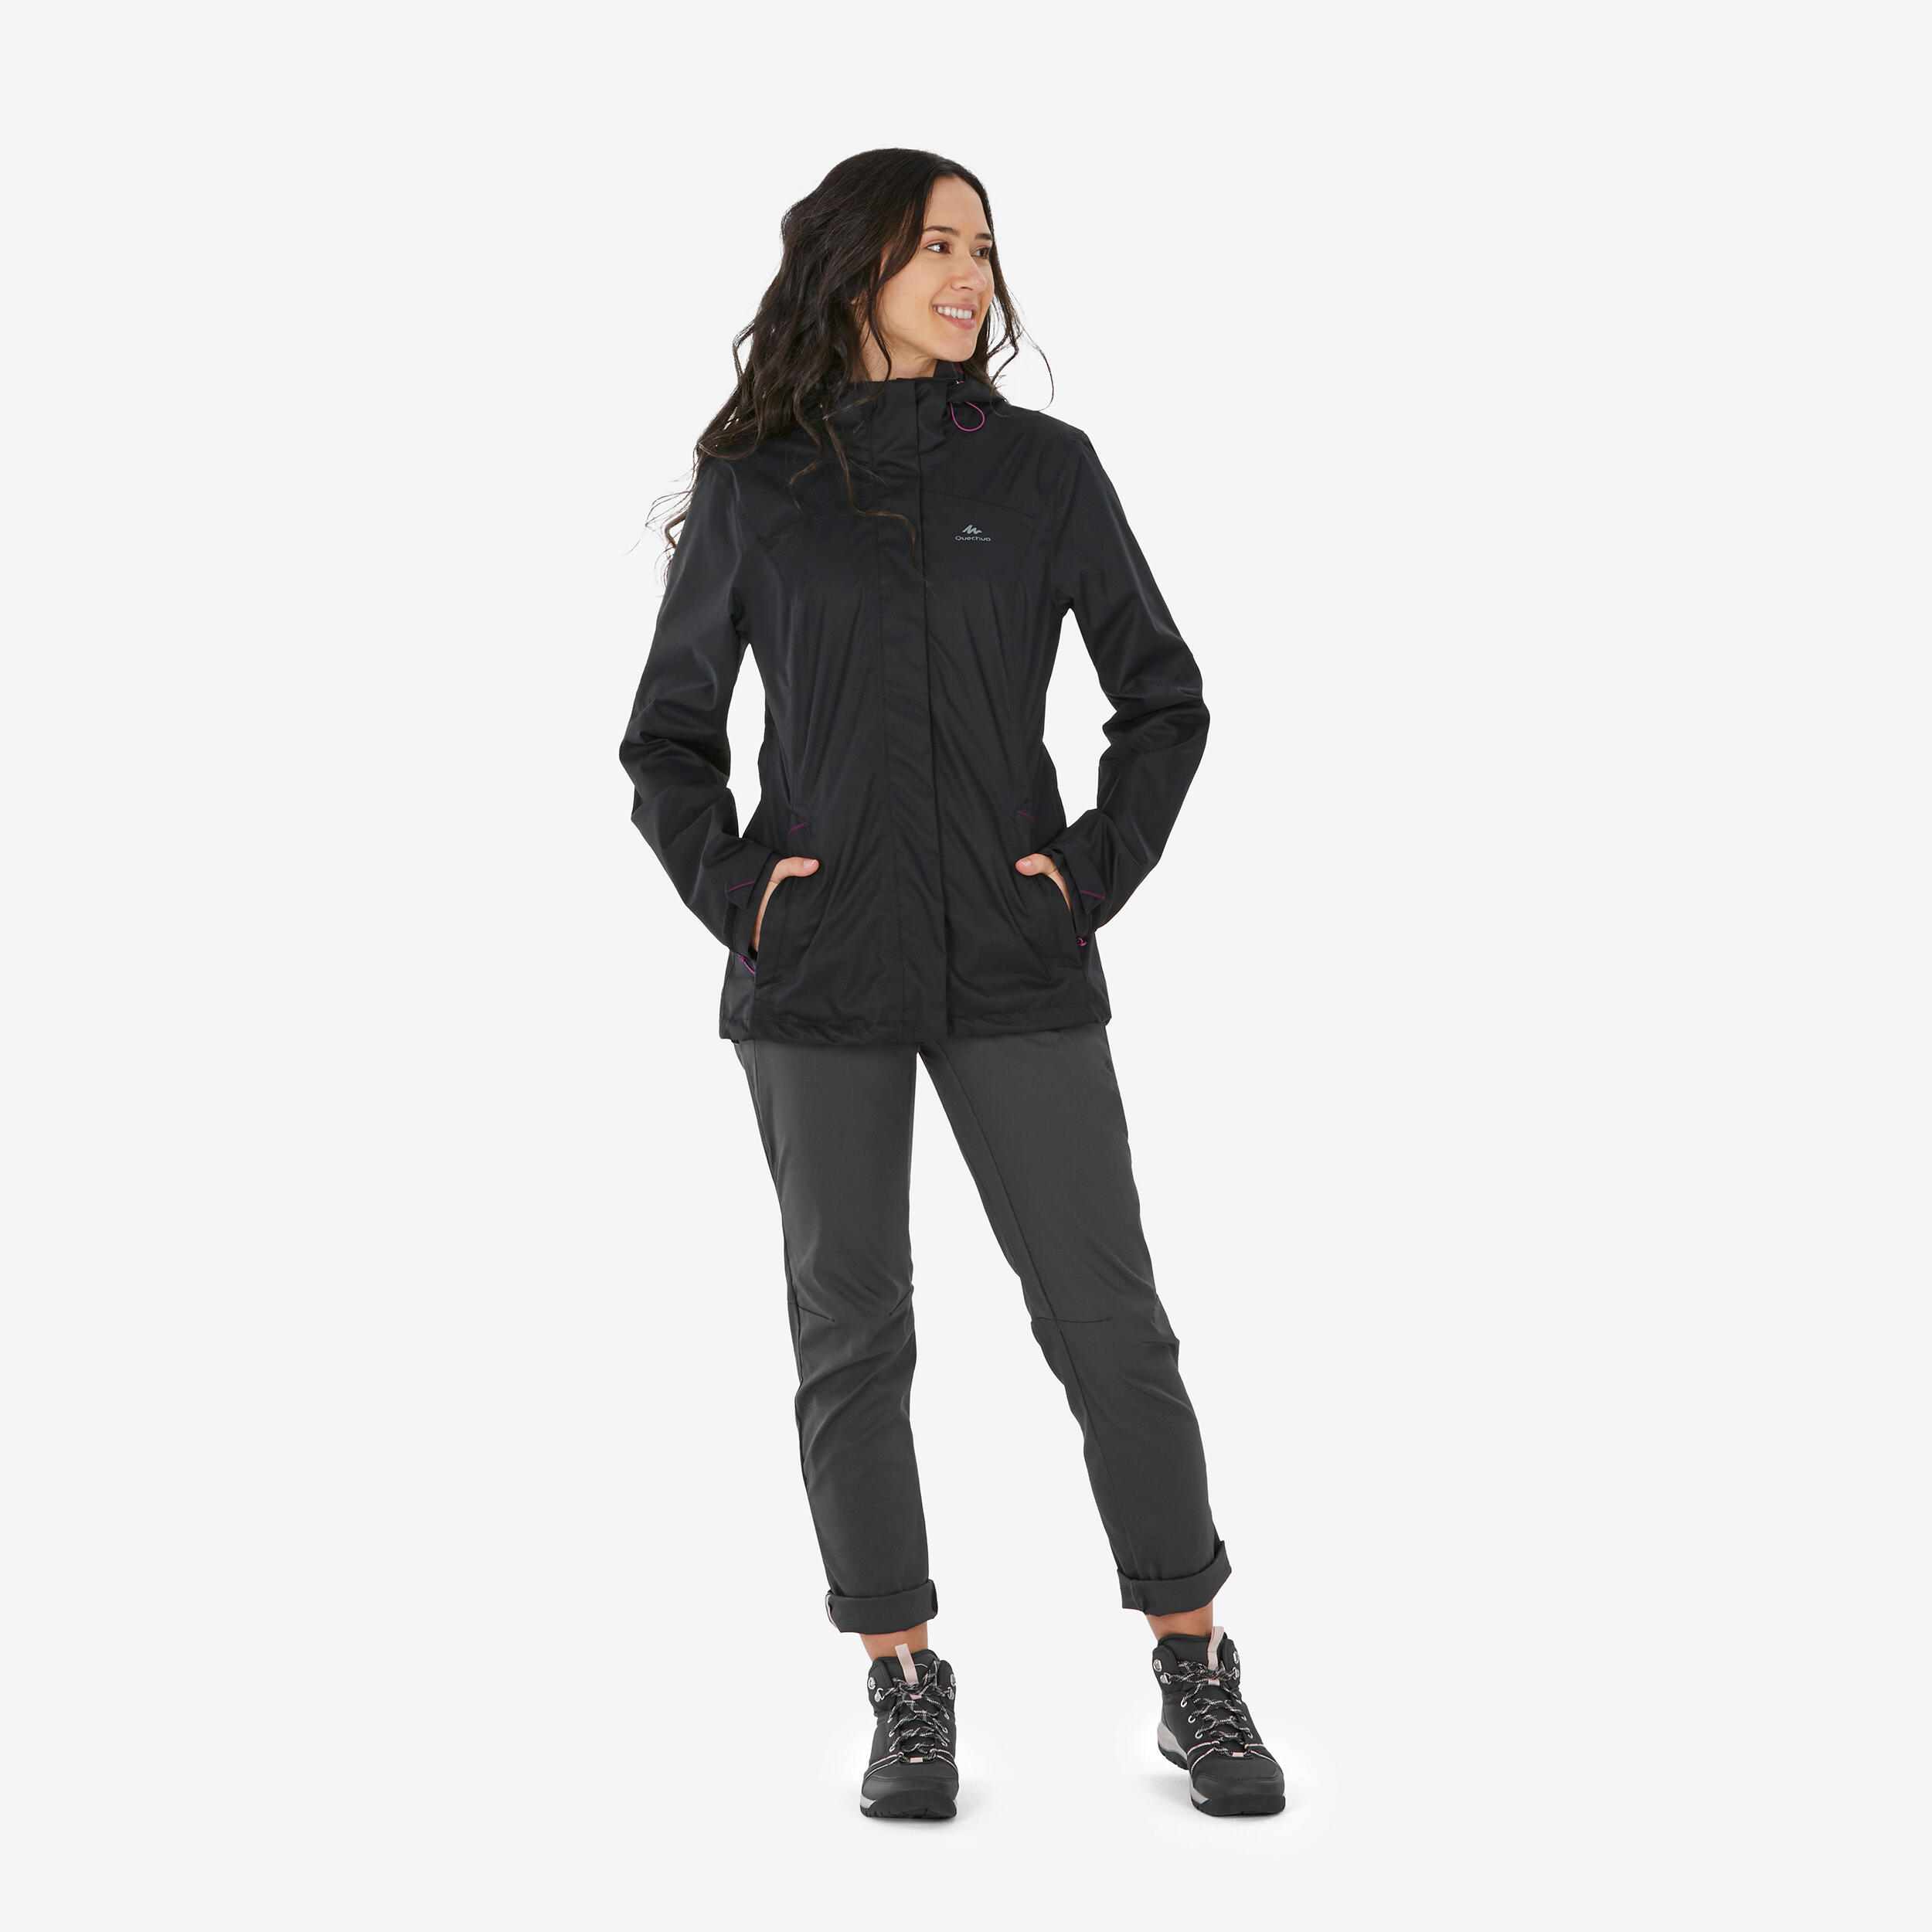 Performance Rain Suit Jacket & Pant Set – The Weather Apparel Company